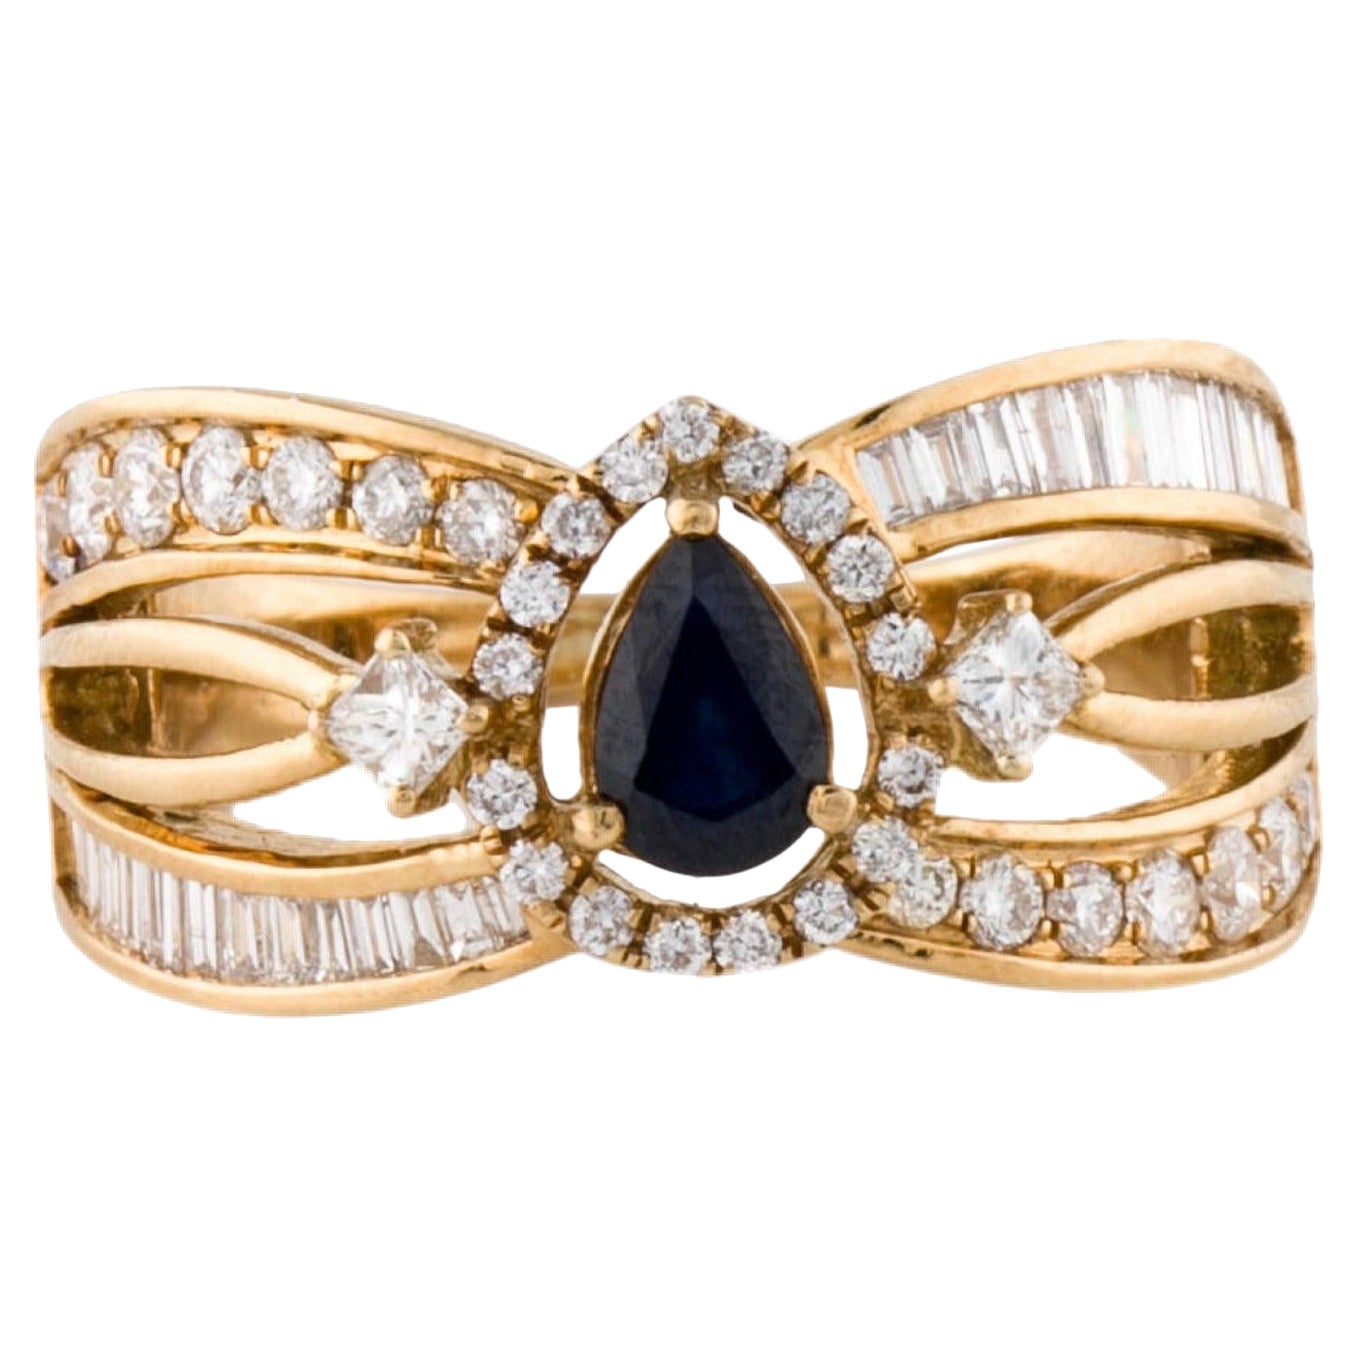 18K Sapphire & Diamond Cocktail Ring Size 6.5 - Elegant, Statement Luxury Design For Sale